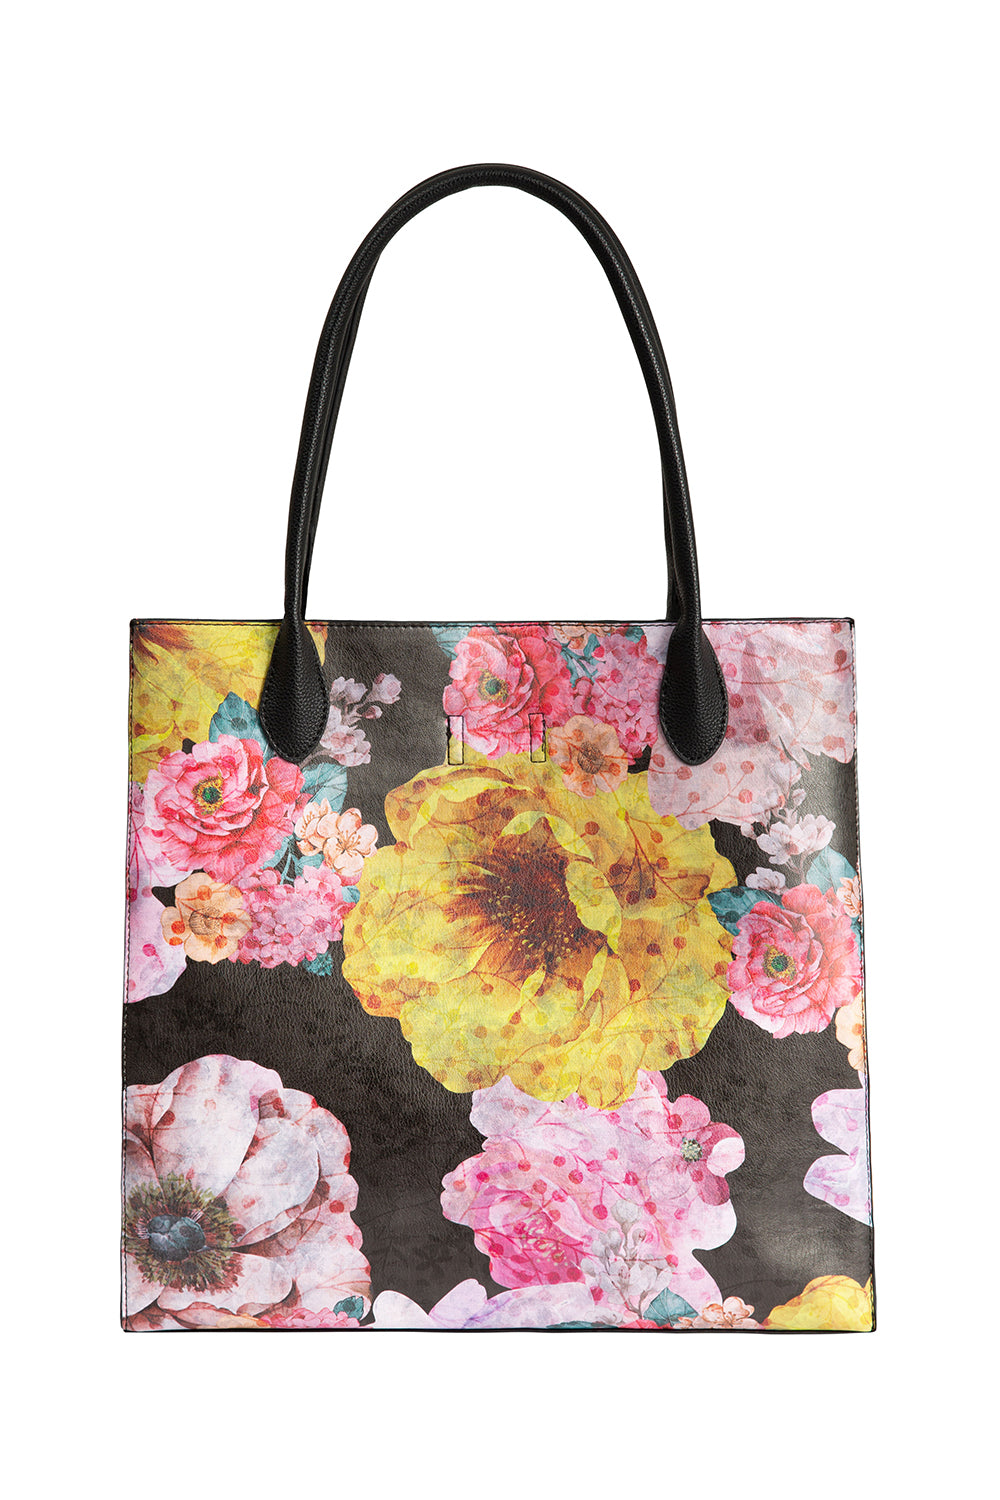 Curate Bag of Tricks Bag Floral Pre-Order